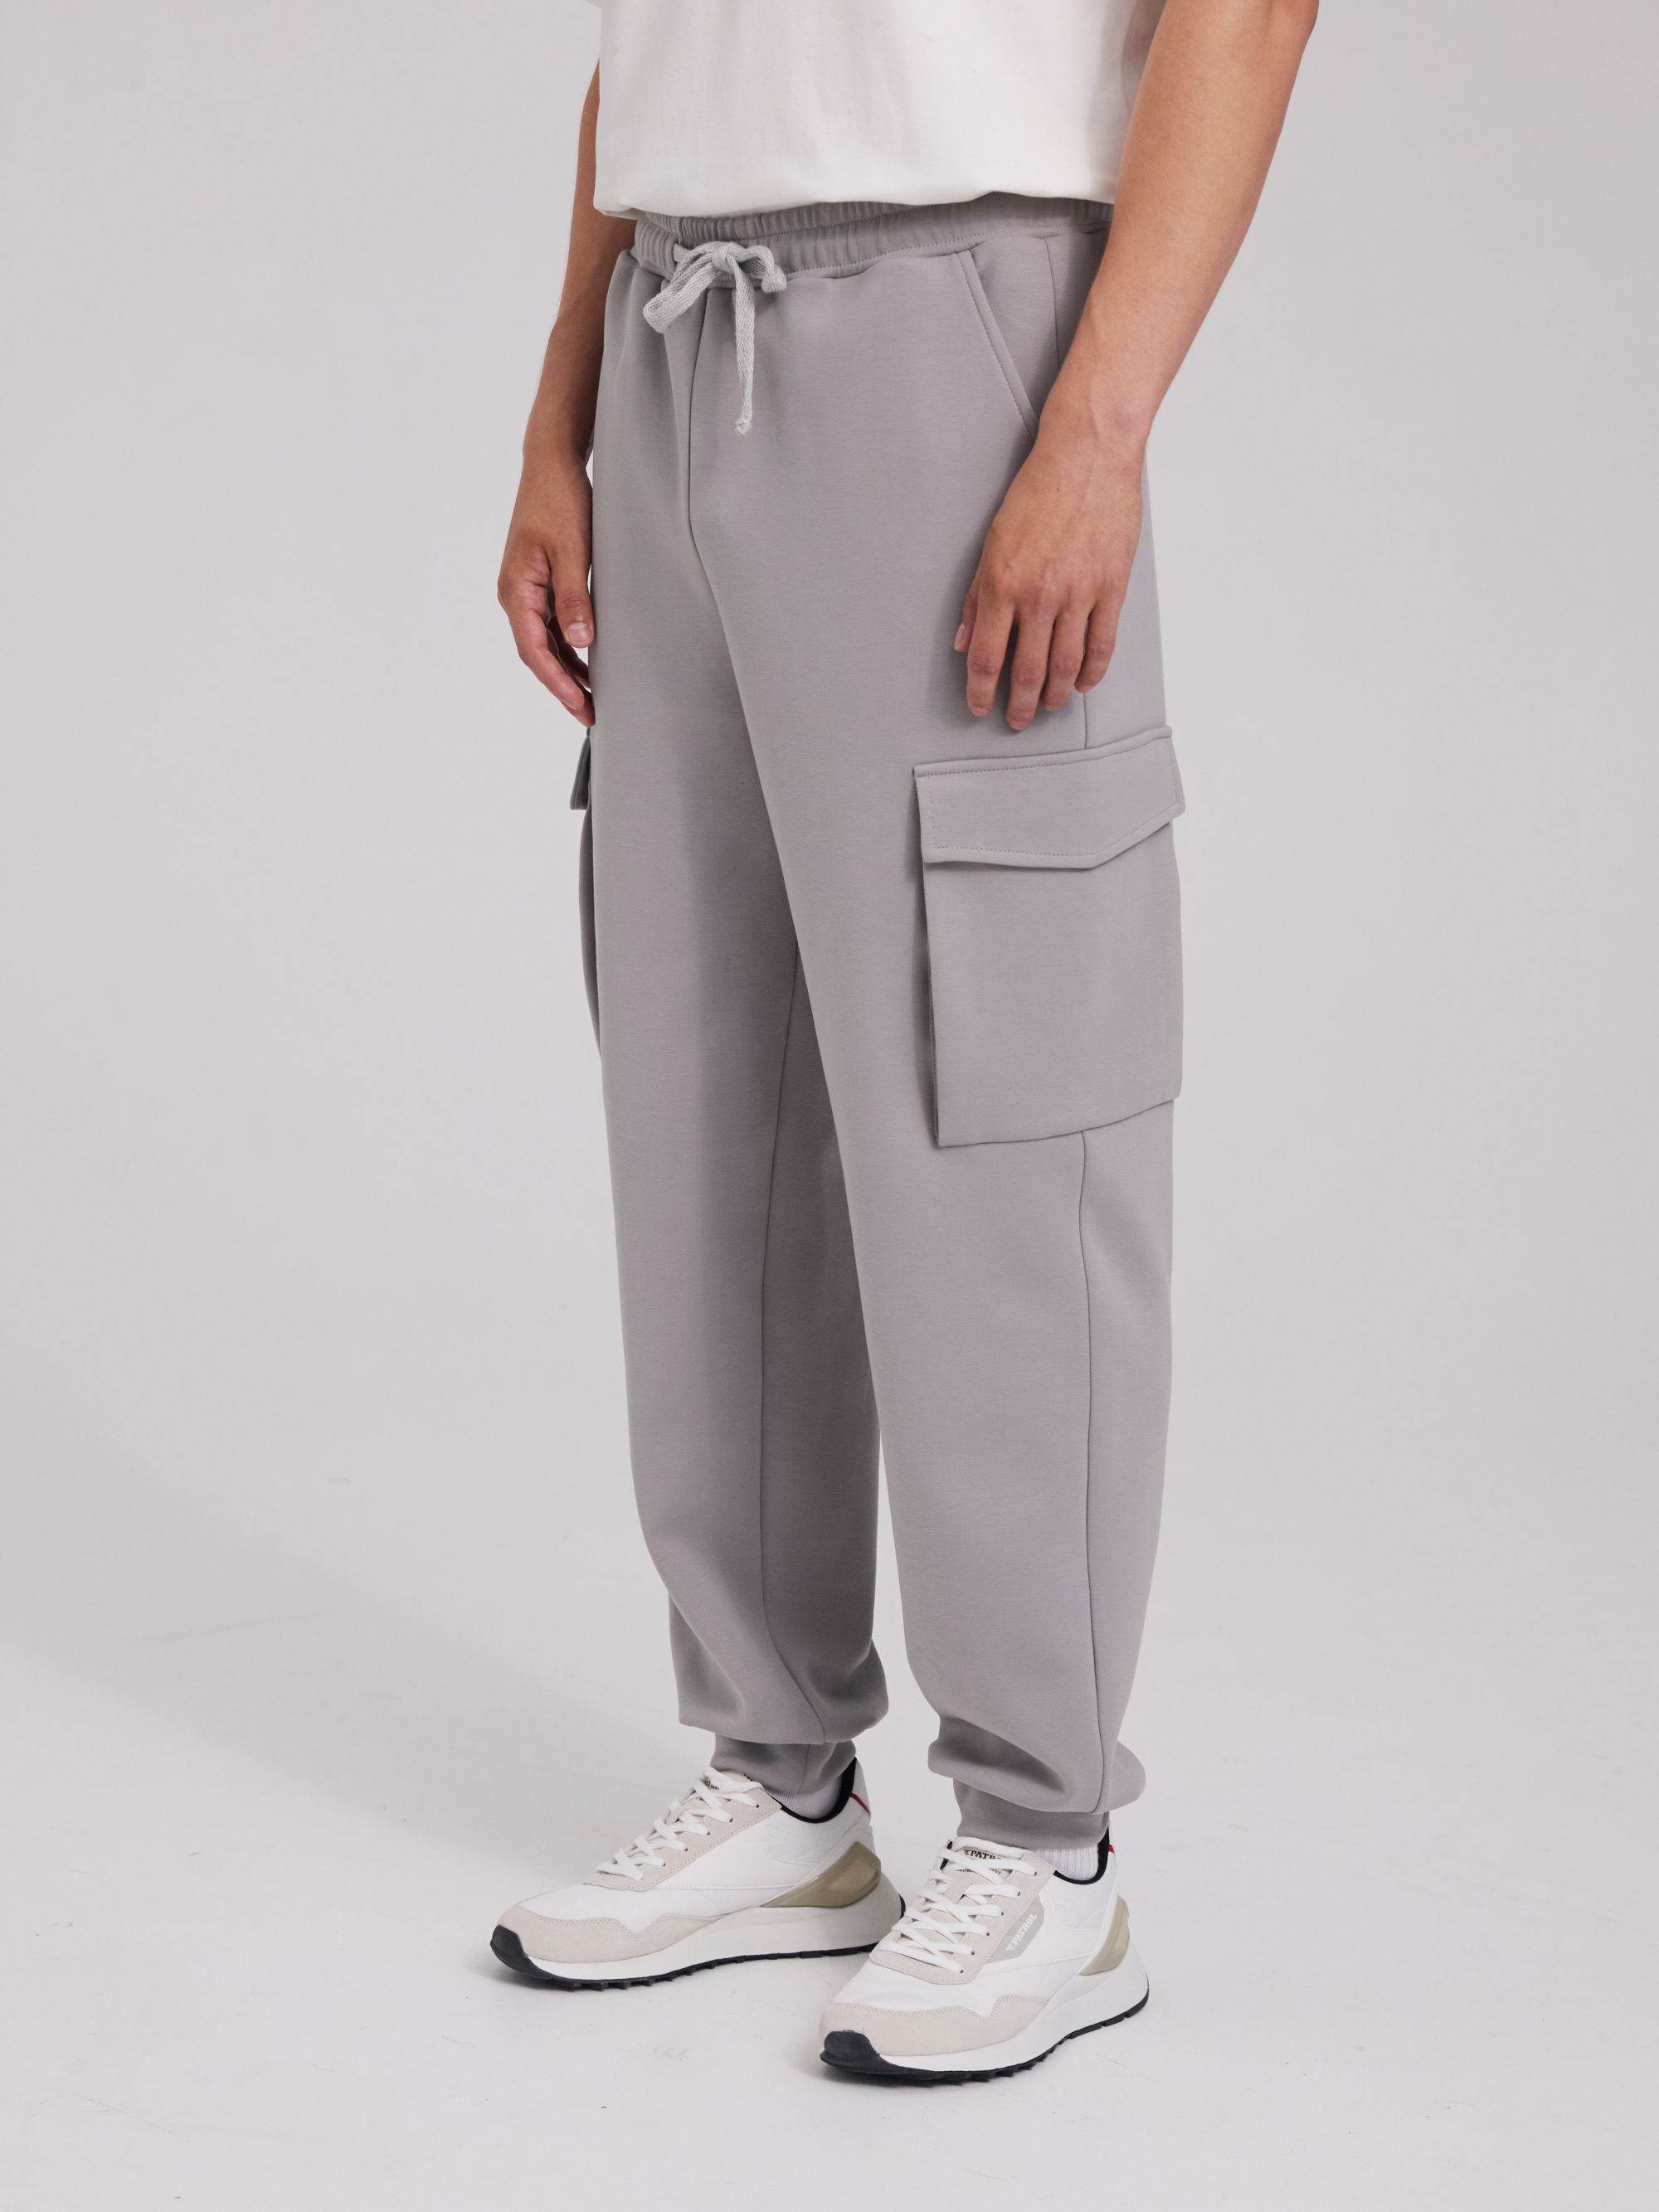 Trousers, pattern №1059 buy on-line